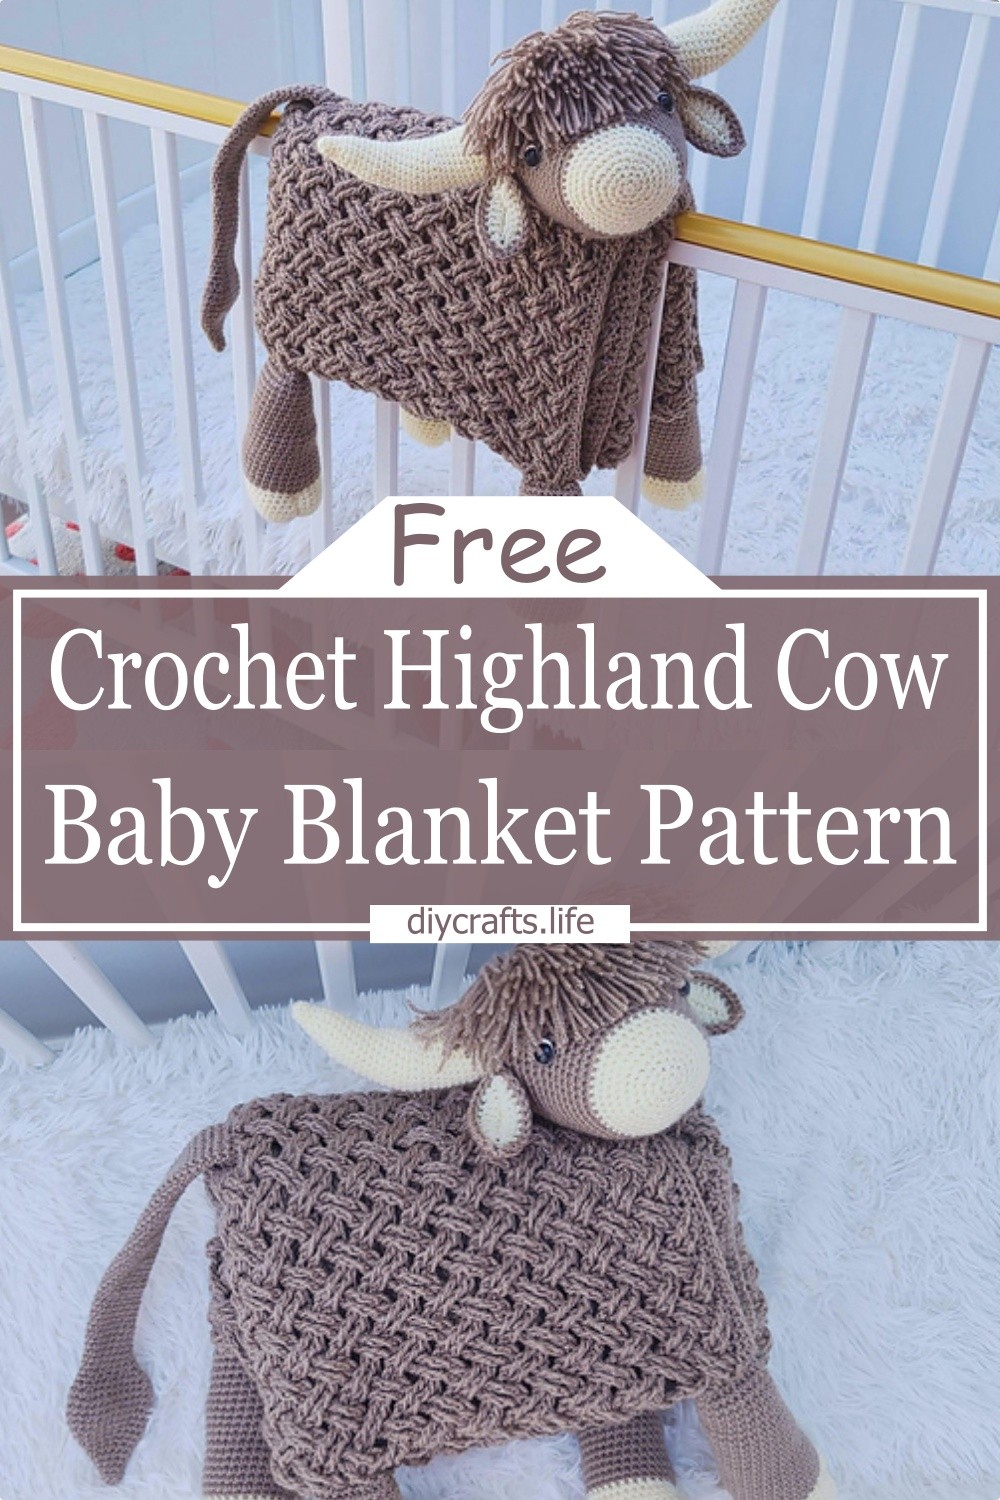 Crochet Highland Cow Baby Blanket Pattern